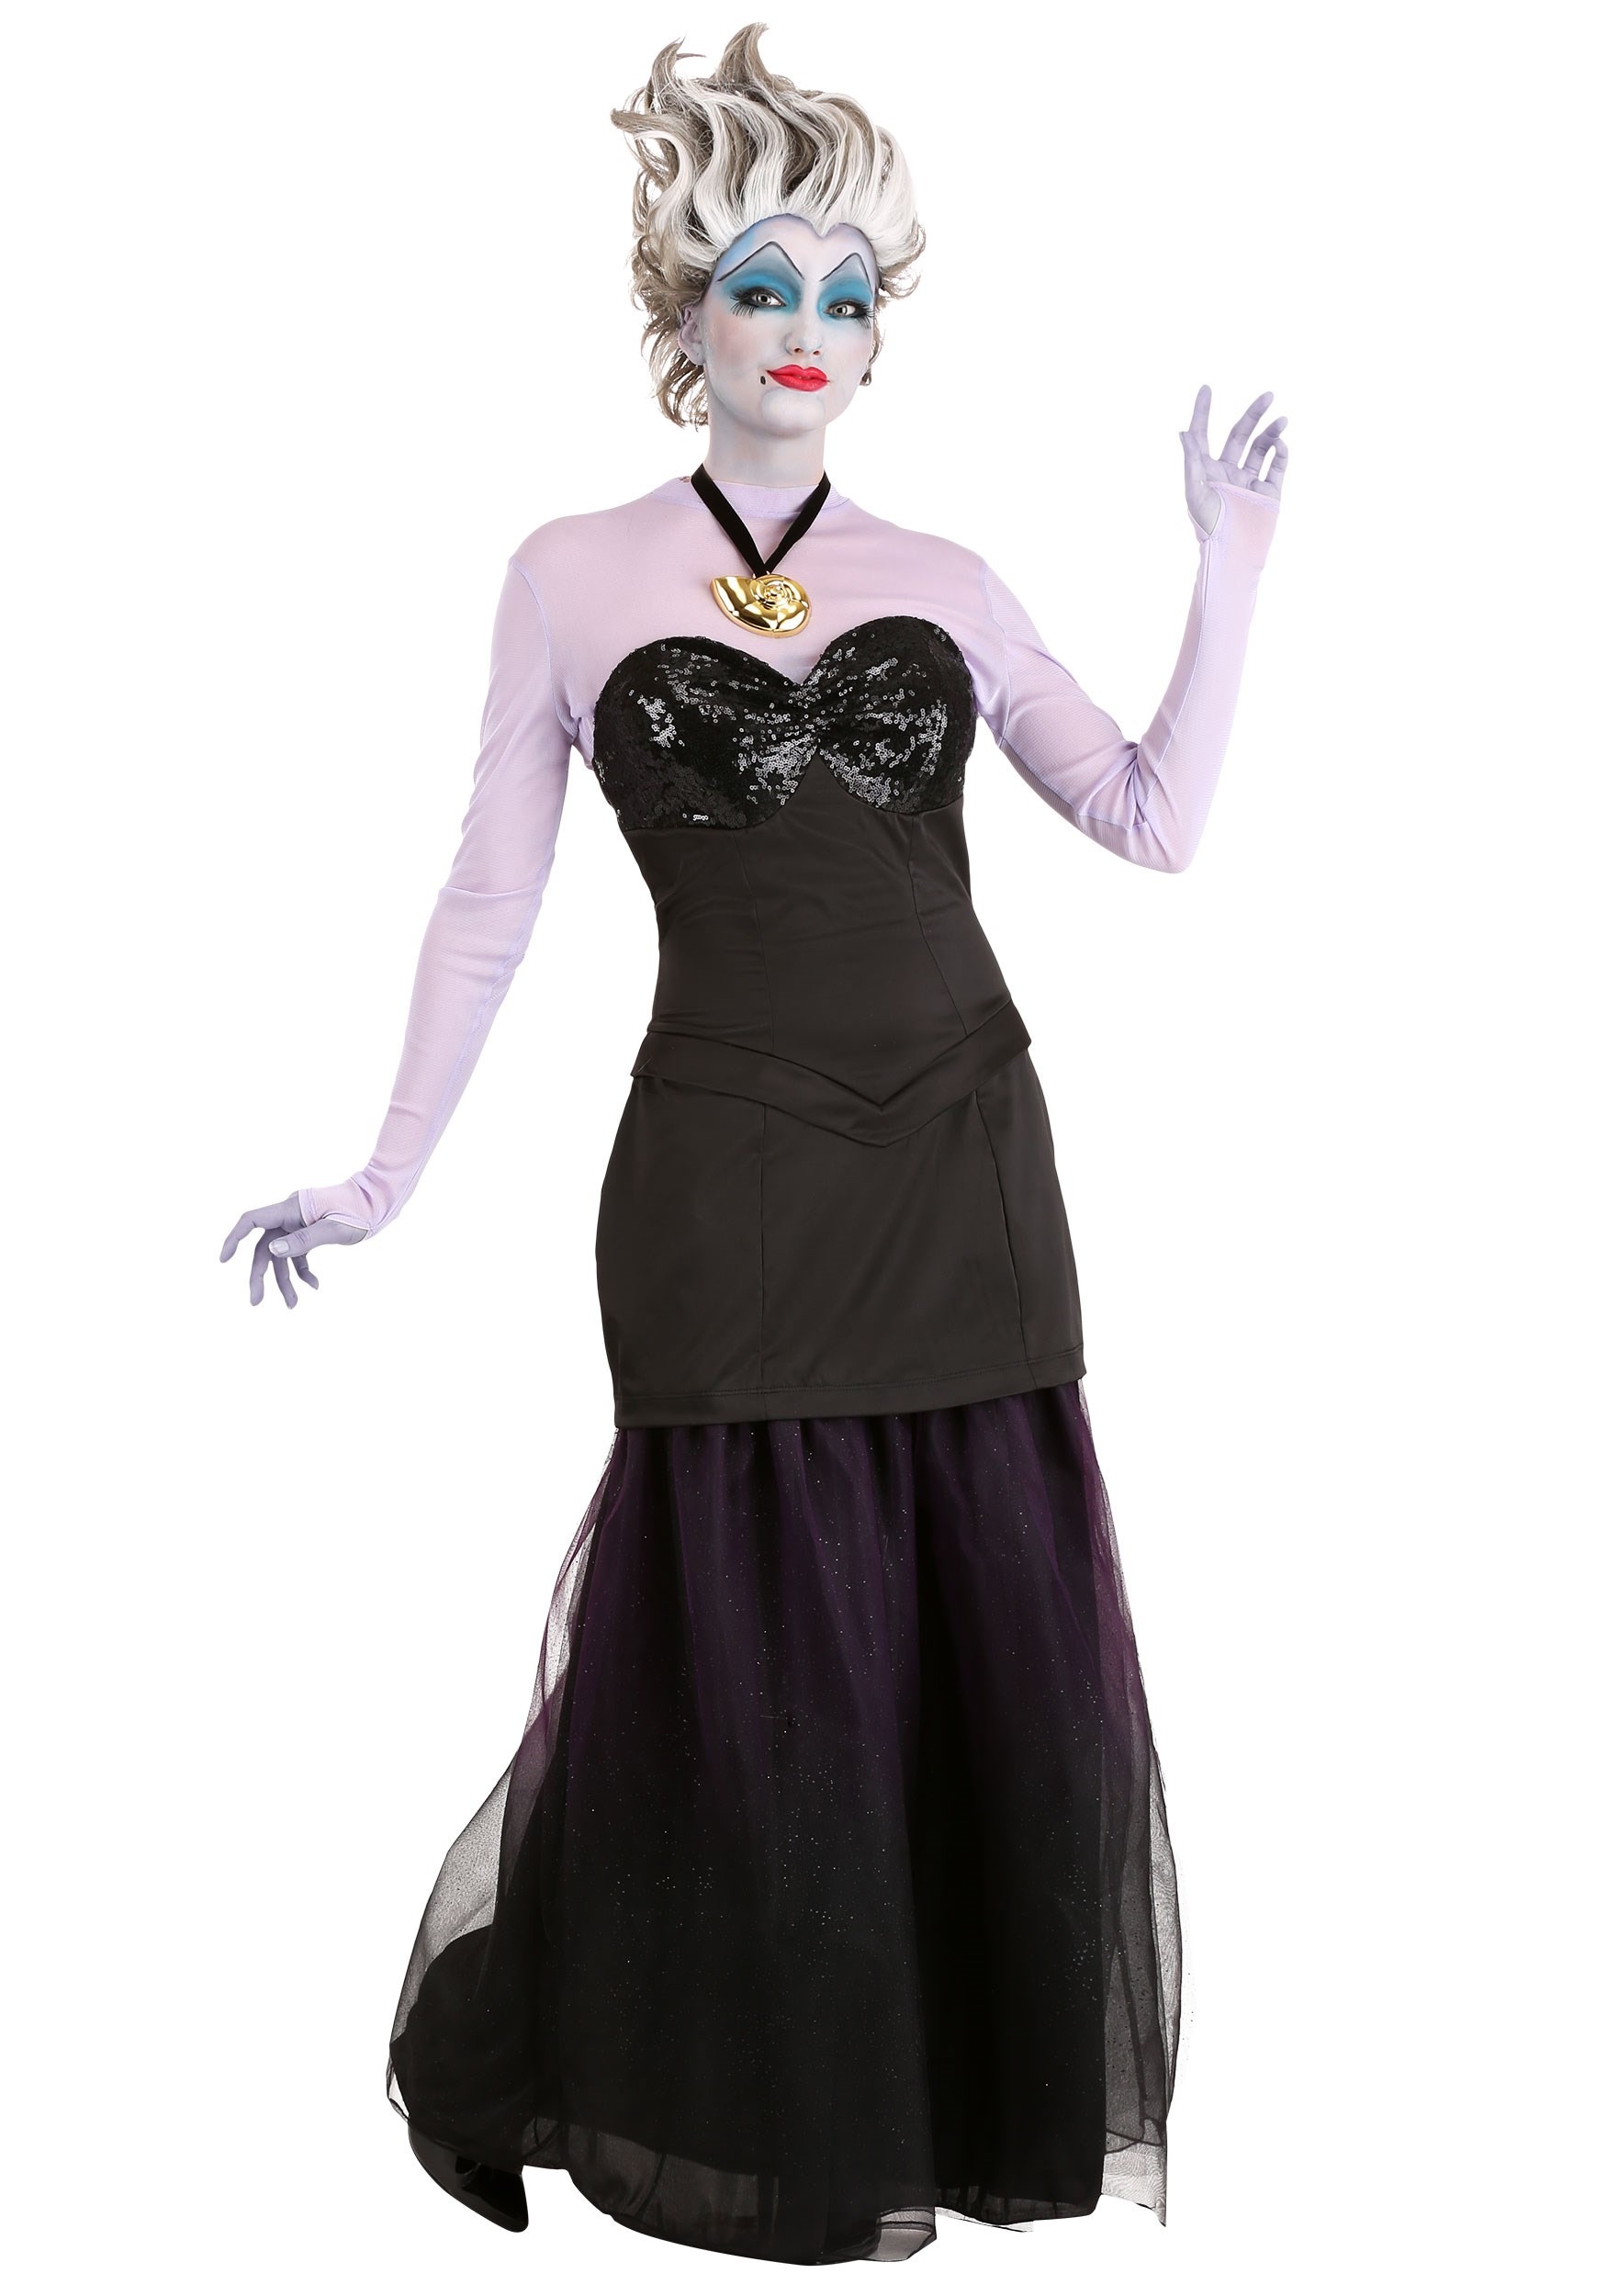 Vanessa Costume from Little Mermaid cosplay costume adult dress